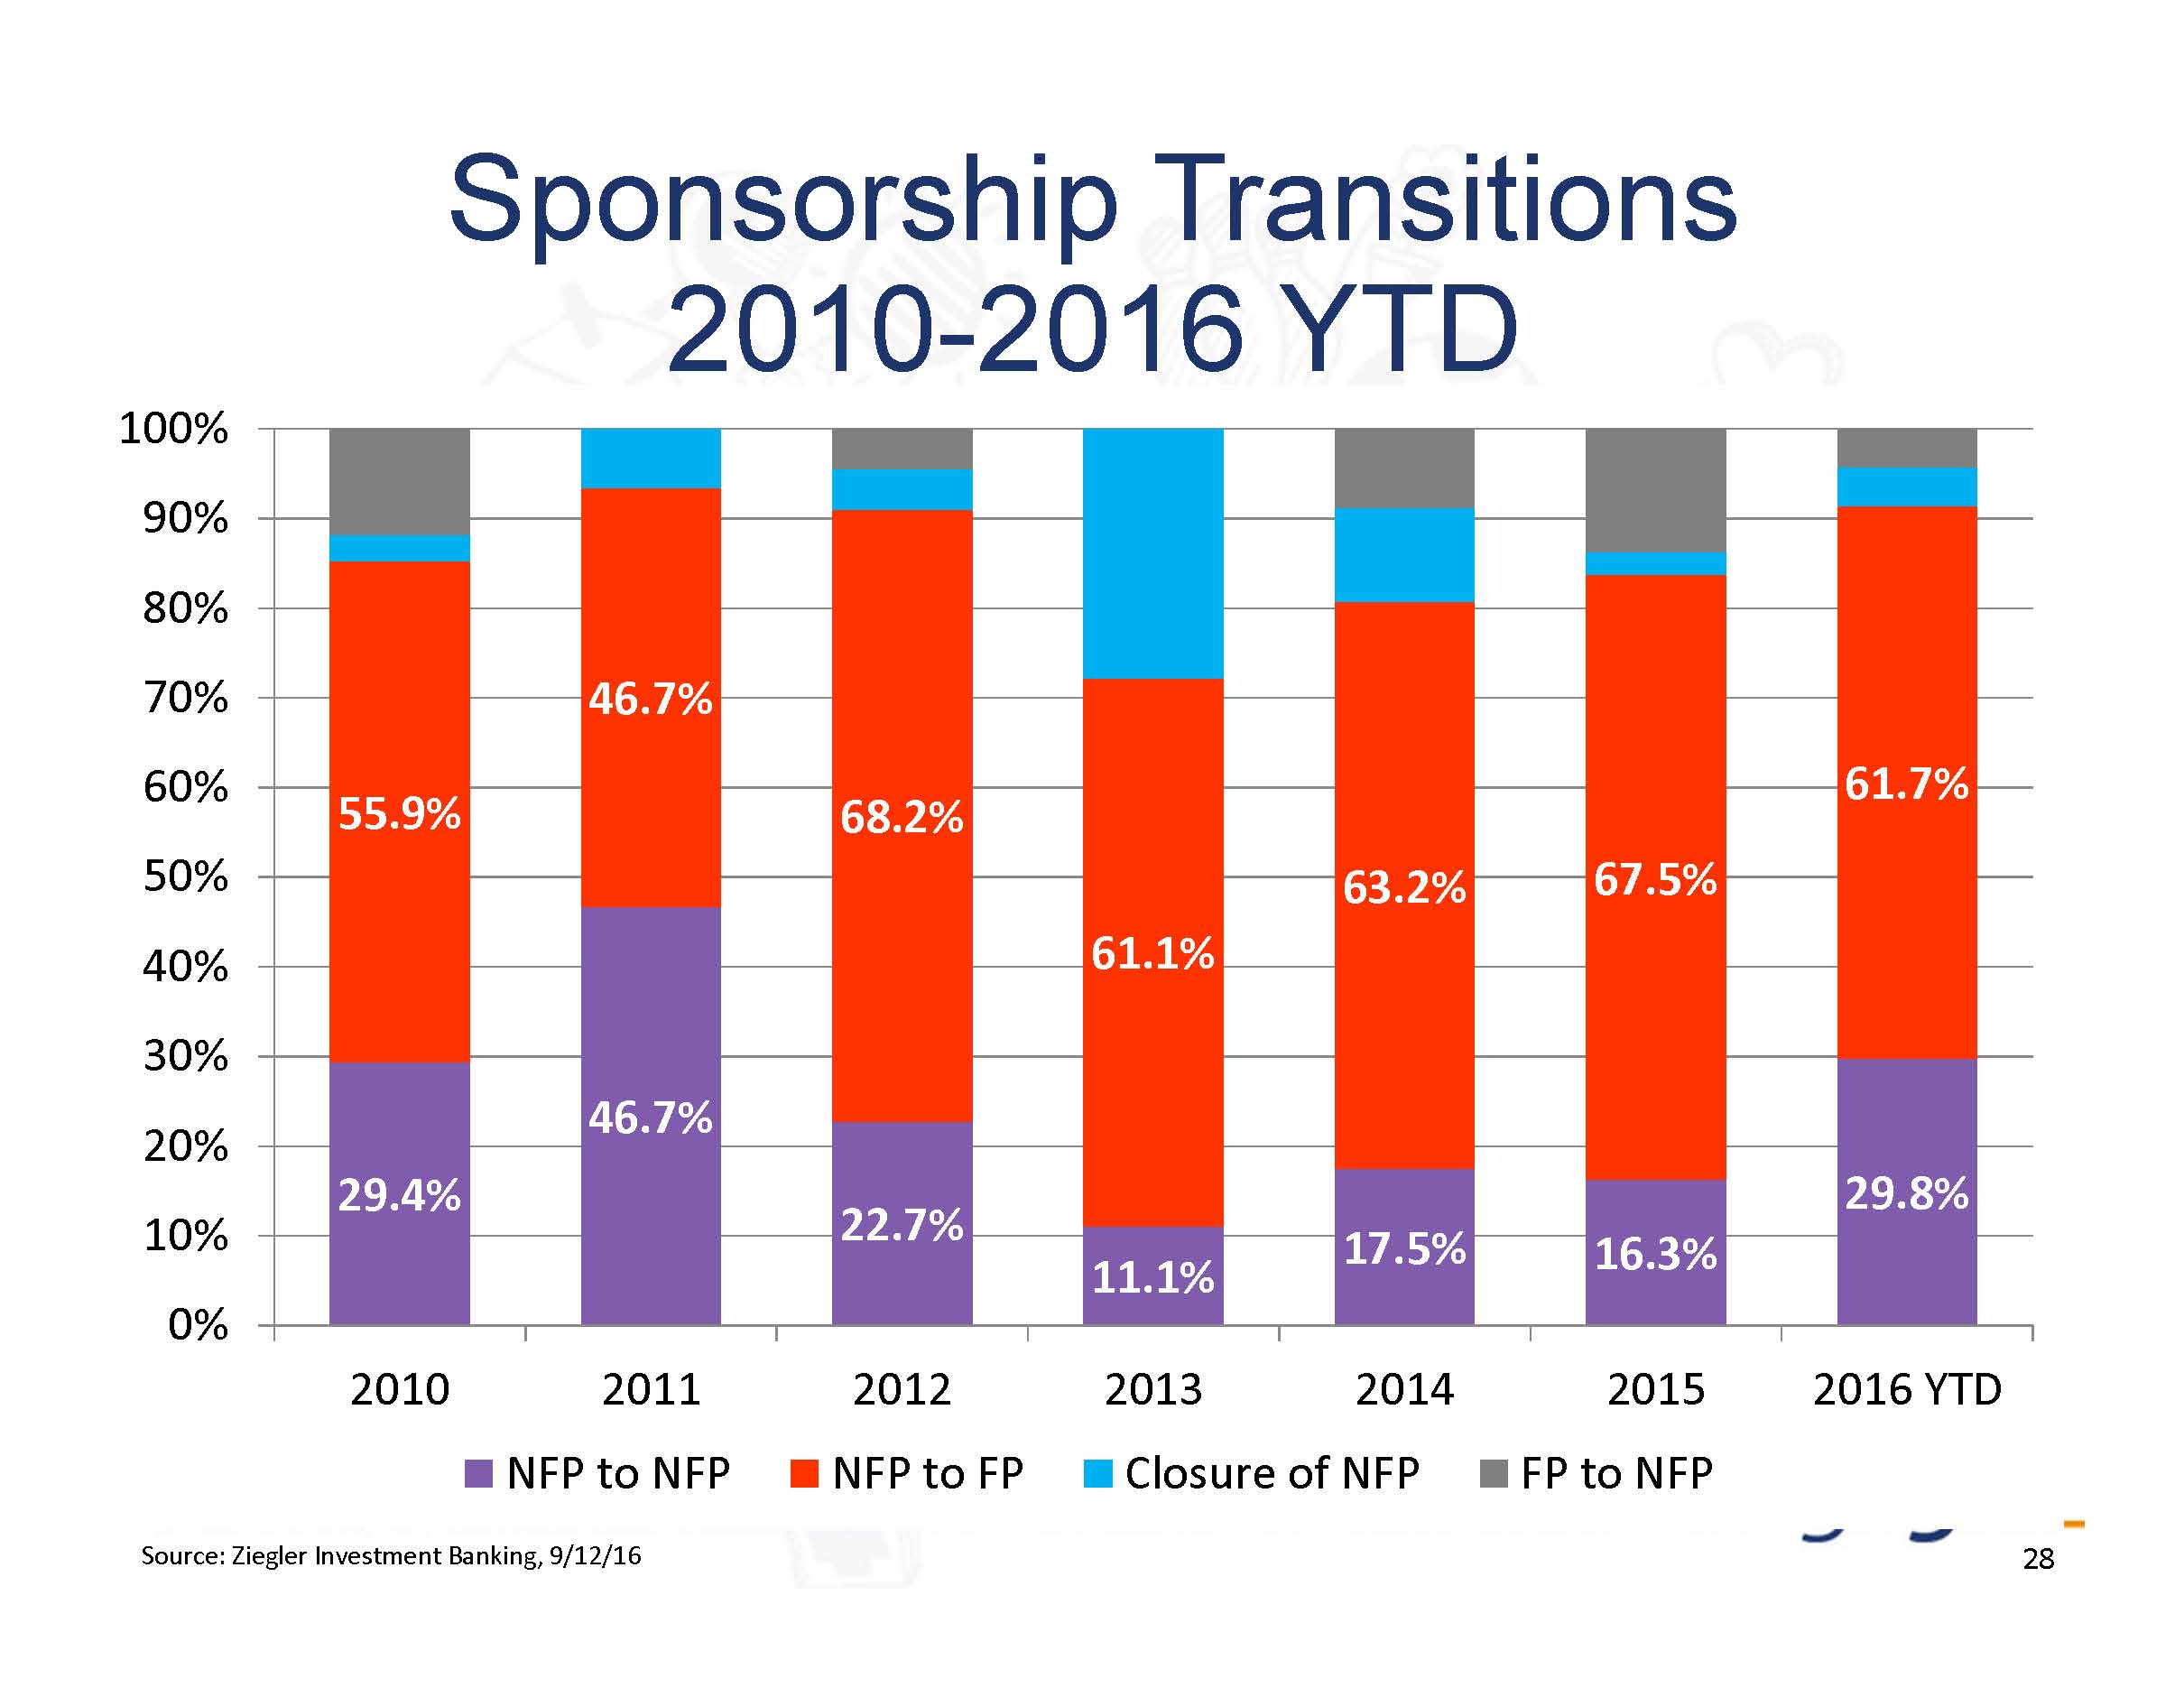 Ziegler chart - senior living sponsorship changes - not for profit to for profit